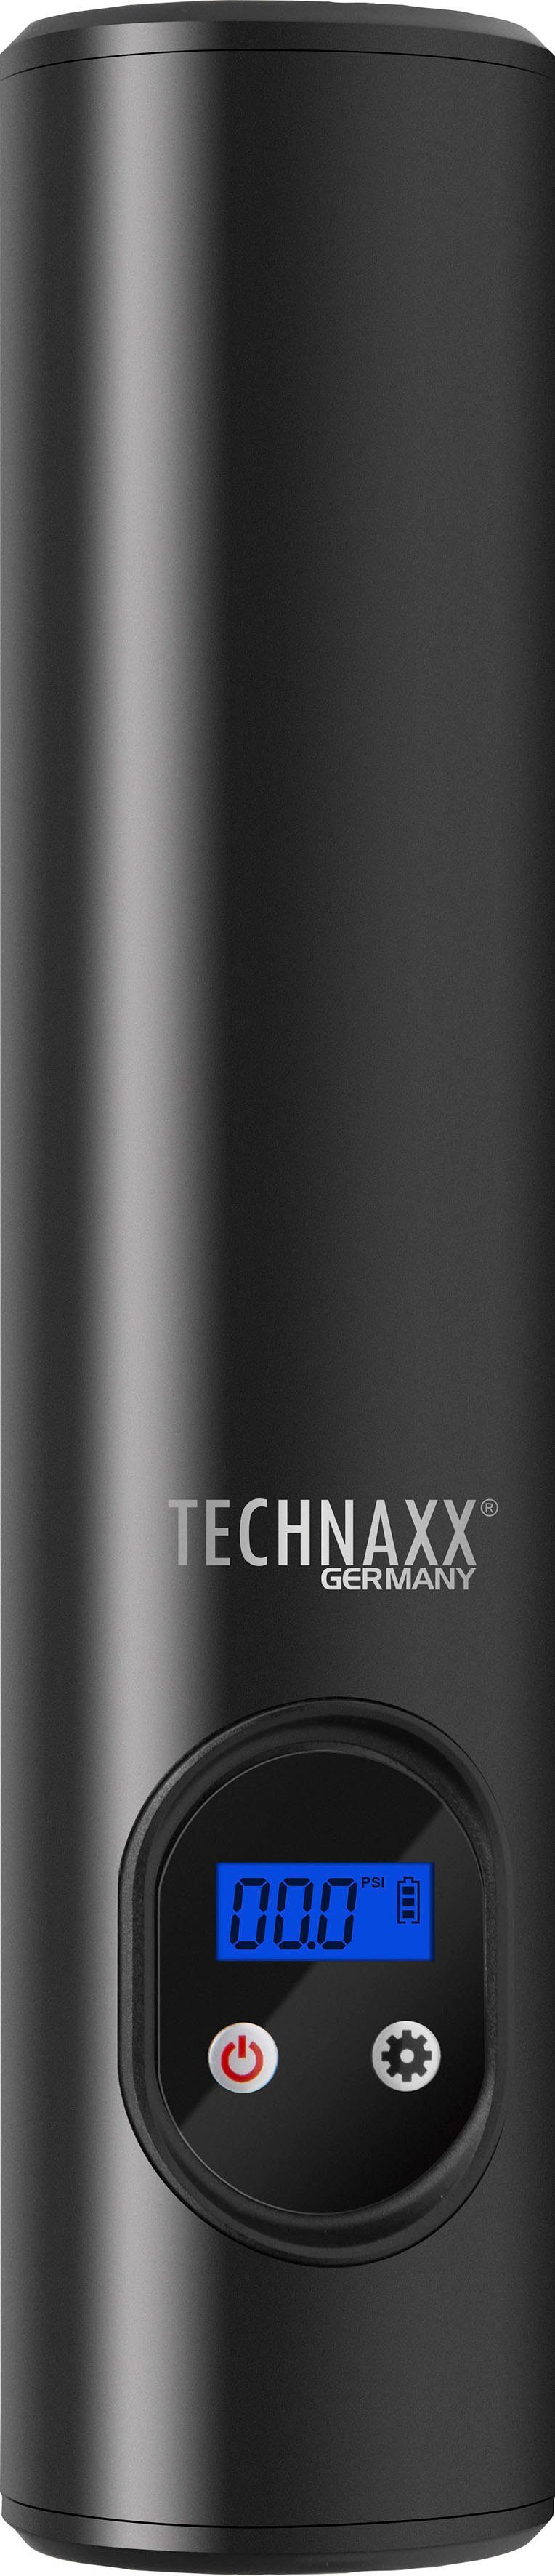 Technaxx Akku-Handkompressor Akku Luftkompressor TX-157, max. 8 bar,  Komplett-Set, Digitale Druckanzeige, gewünschter Druck einstellbar